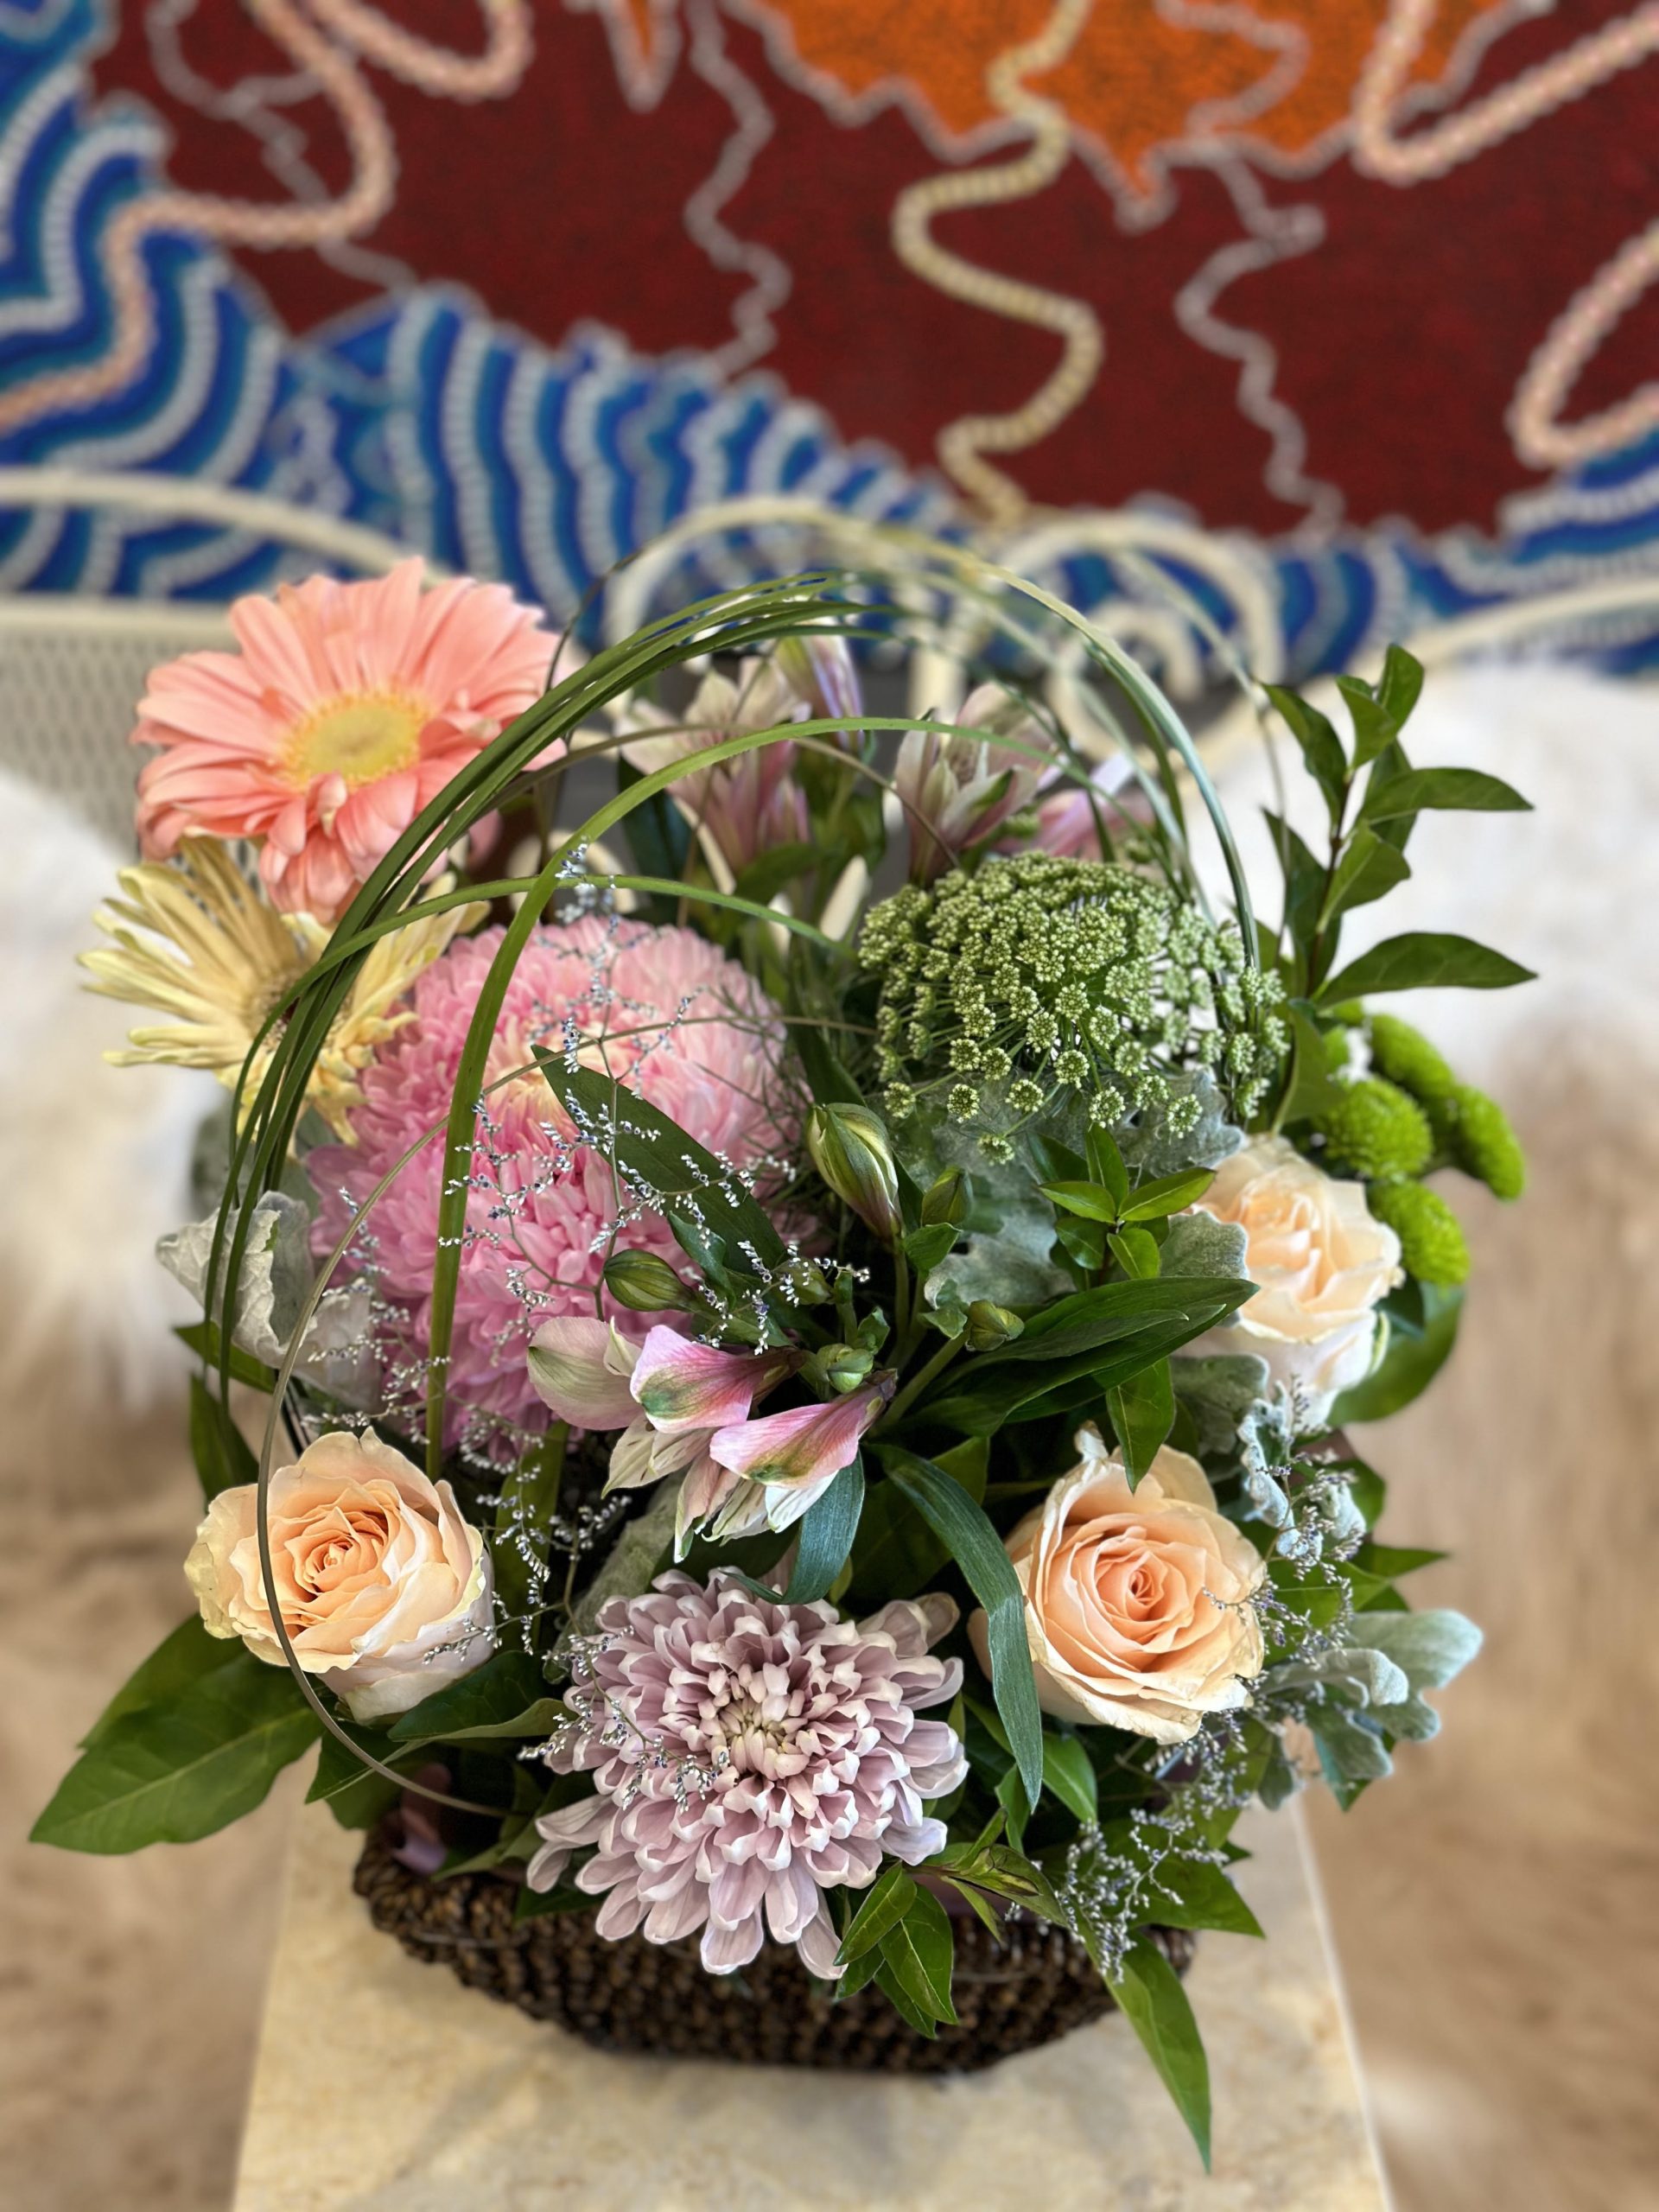 Mother's Day Floral Basket